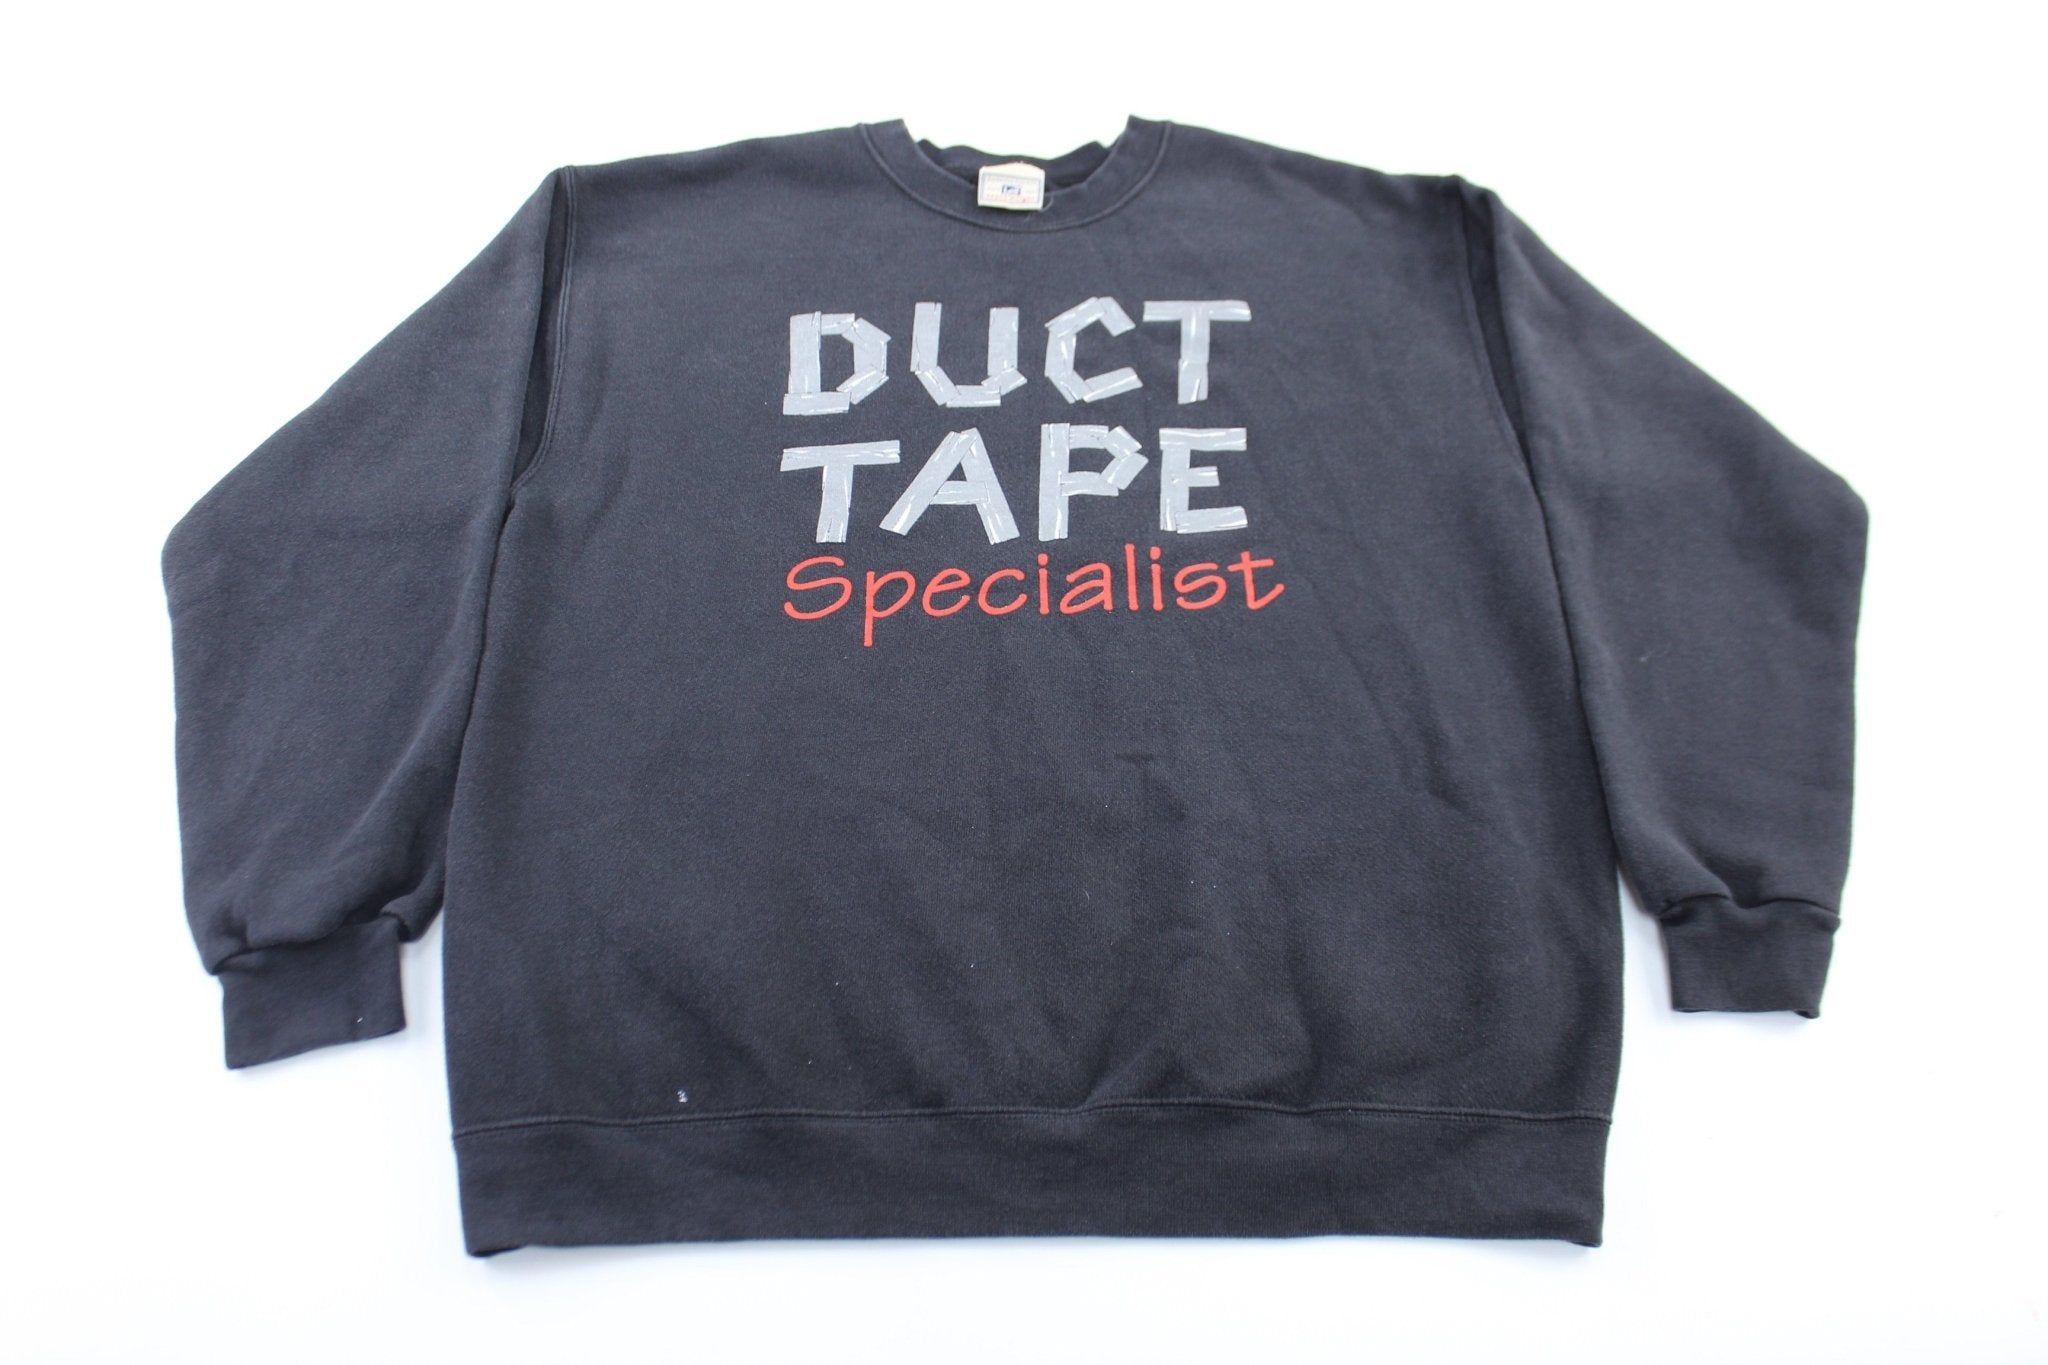 Vintage Duct Tape Specialist Sweatshirt - ThriftedThreads.com